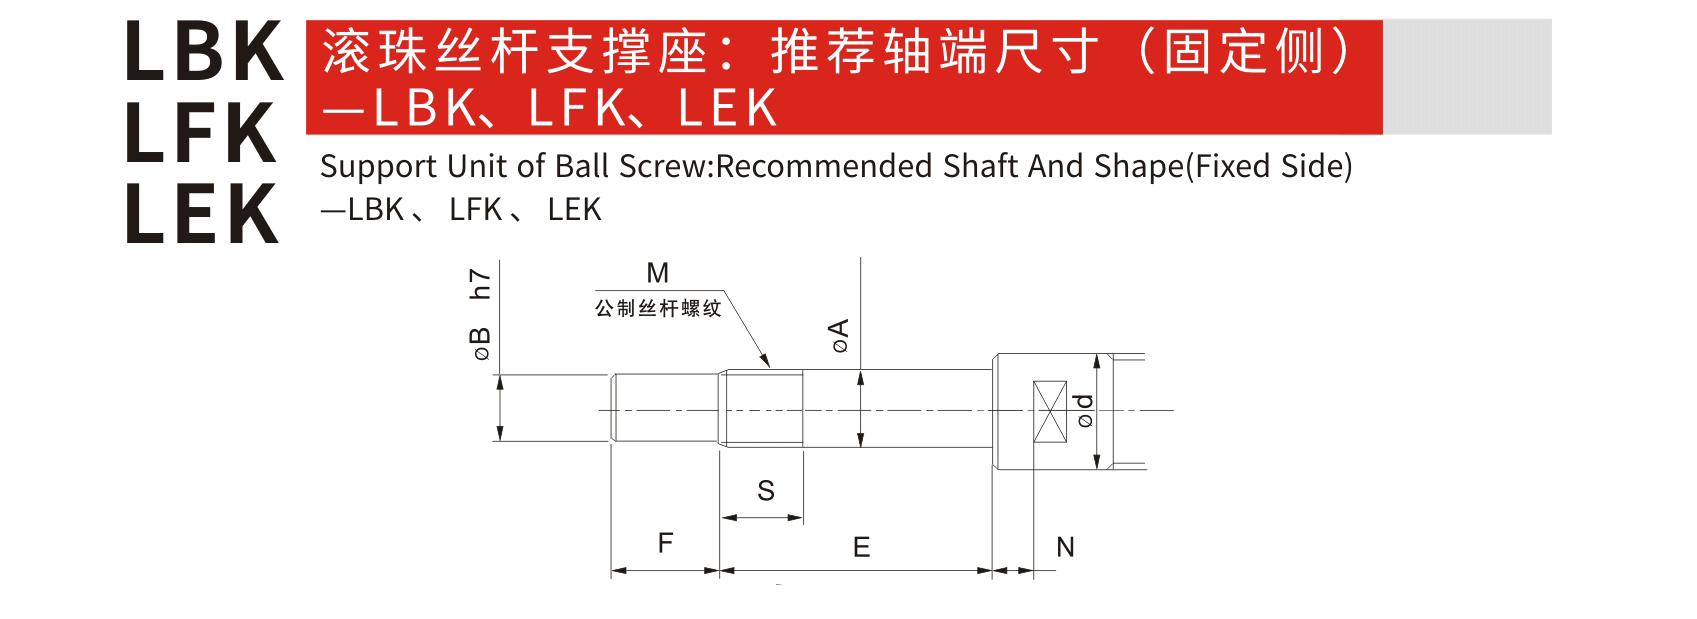 LBK 固定侧_联轴器种类-广州菱科自动化设备有限公司